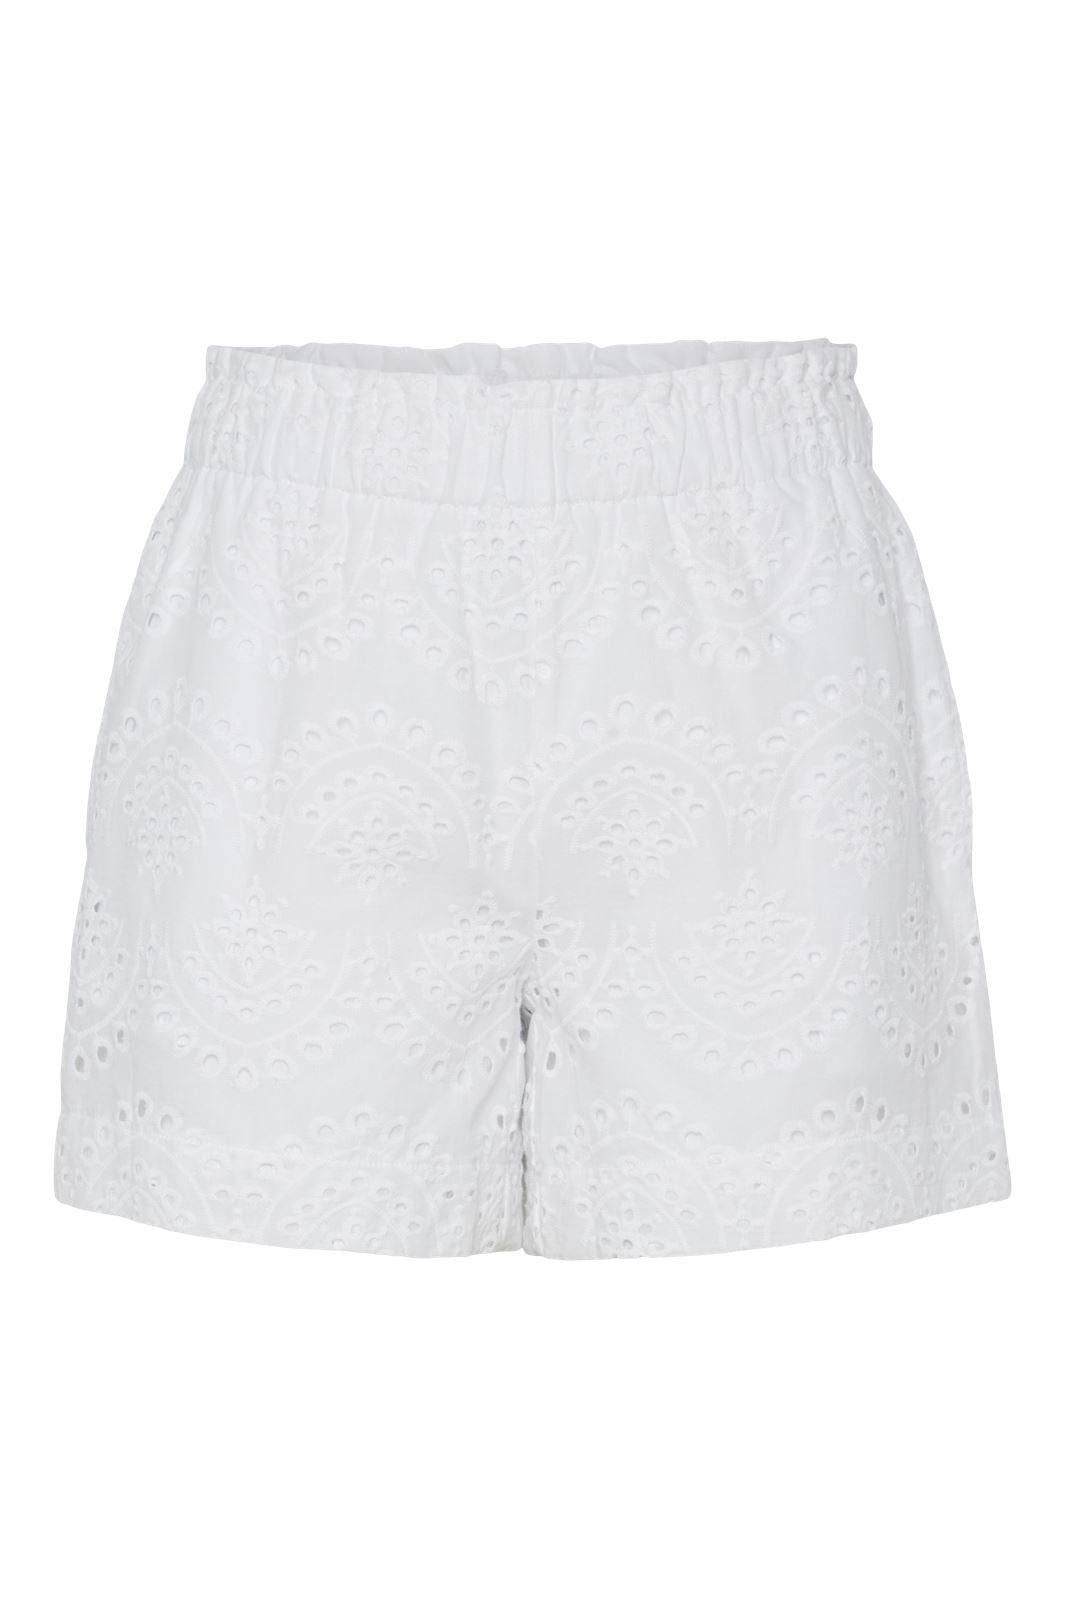 Pieces - Pcvilde Shorts - 4649434 Bright White